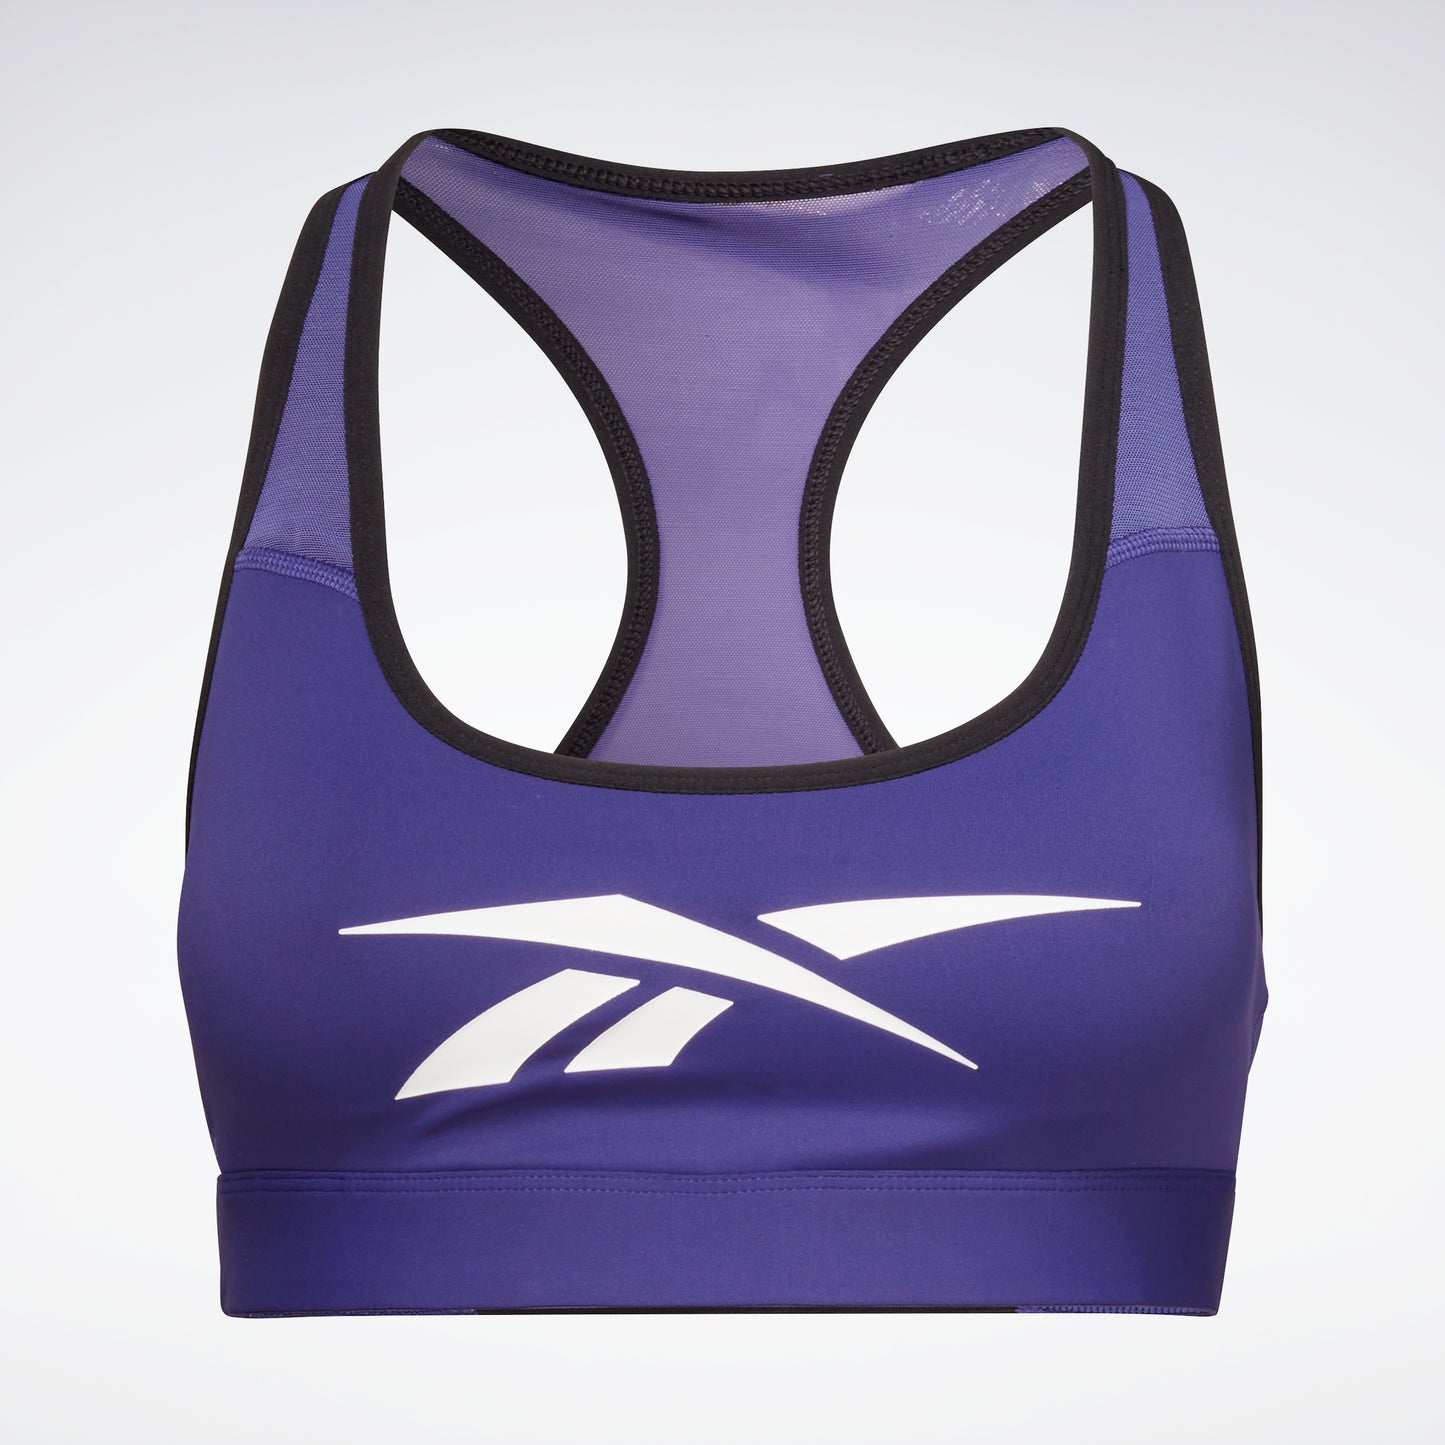 Reebok lilac and purple lined sports bra w adjustable satin tank